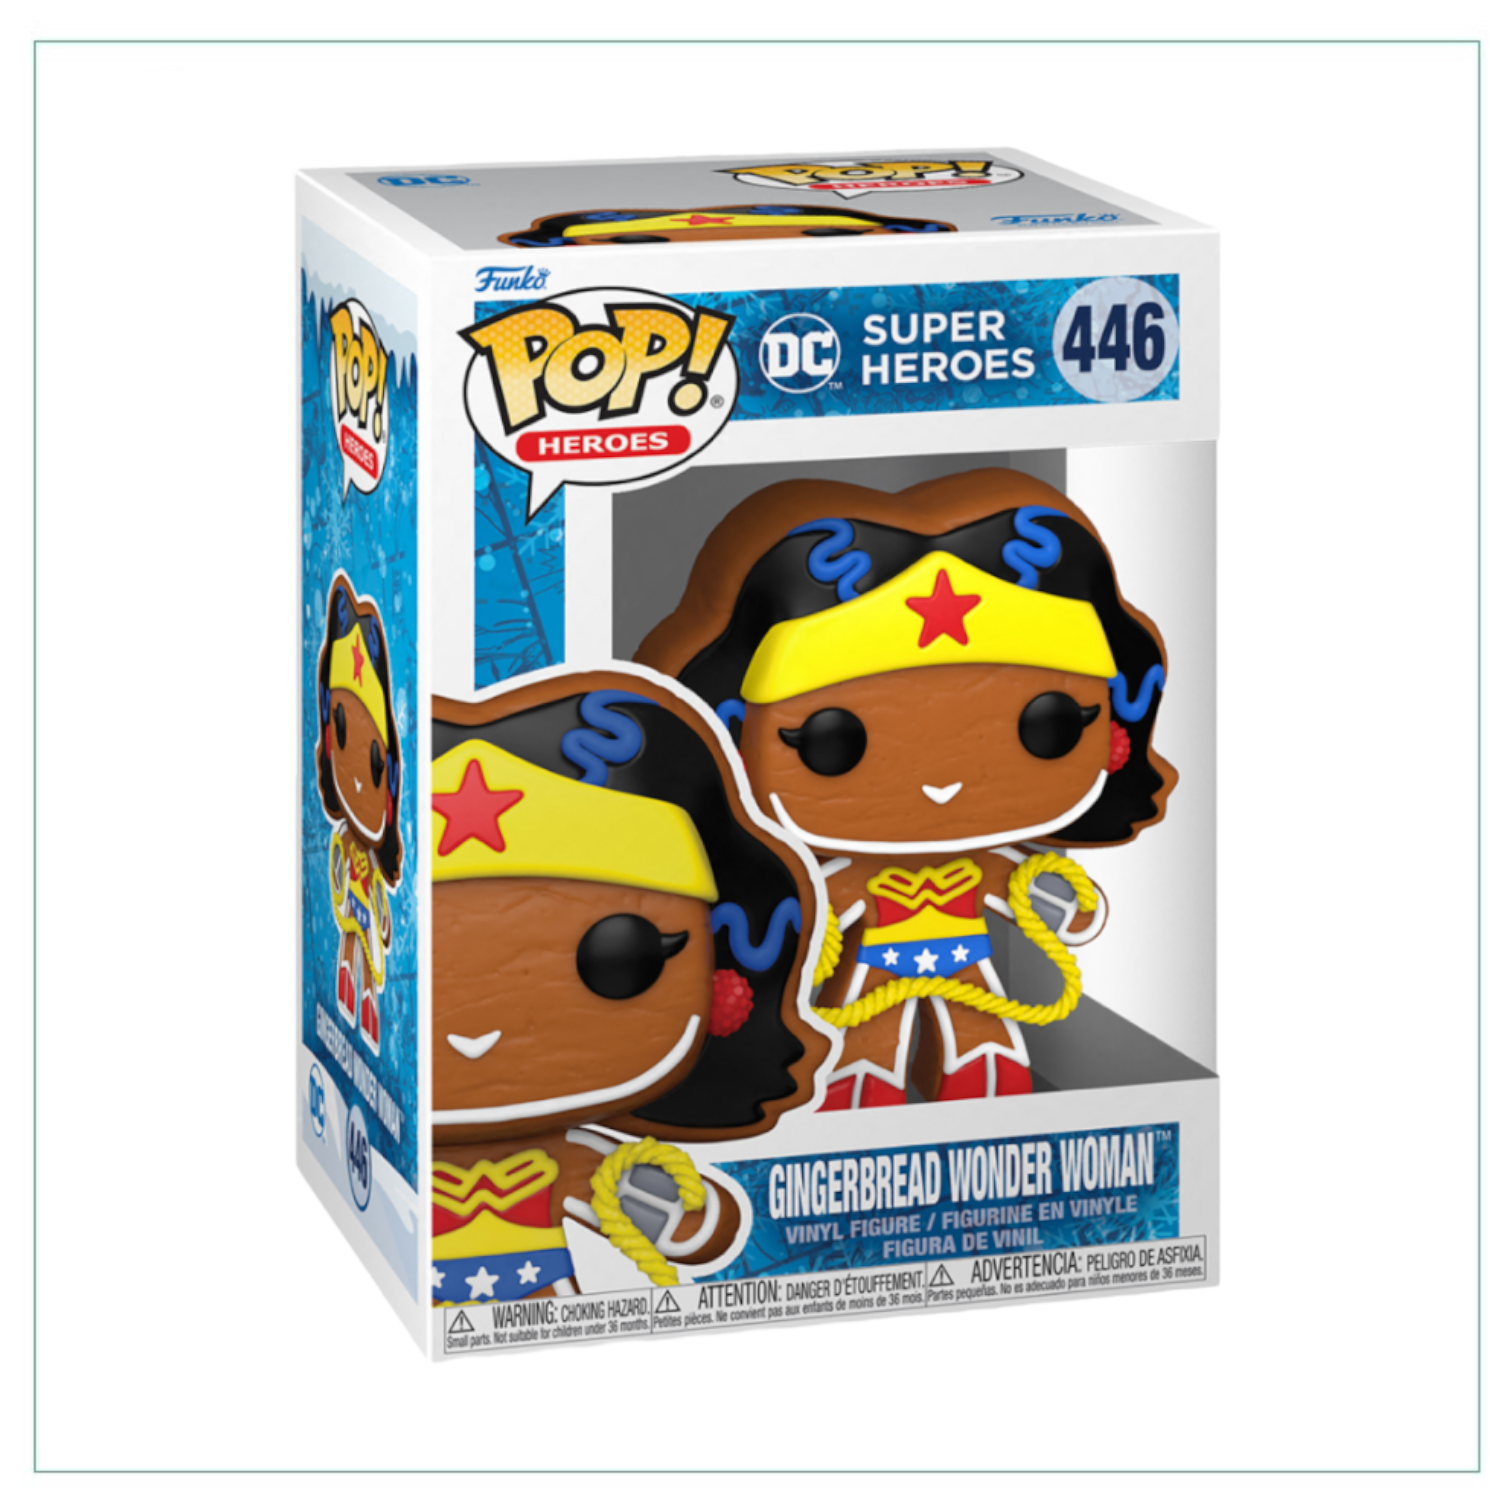 Gingerbread Wonder Woman #446 Funko Pop! DC